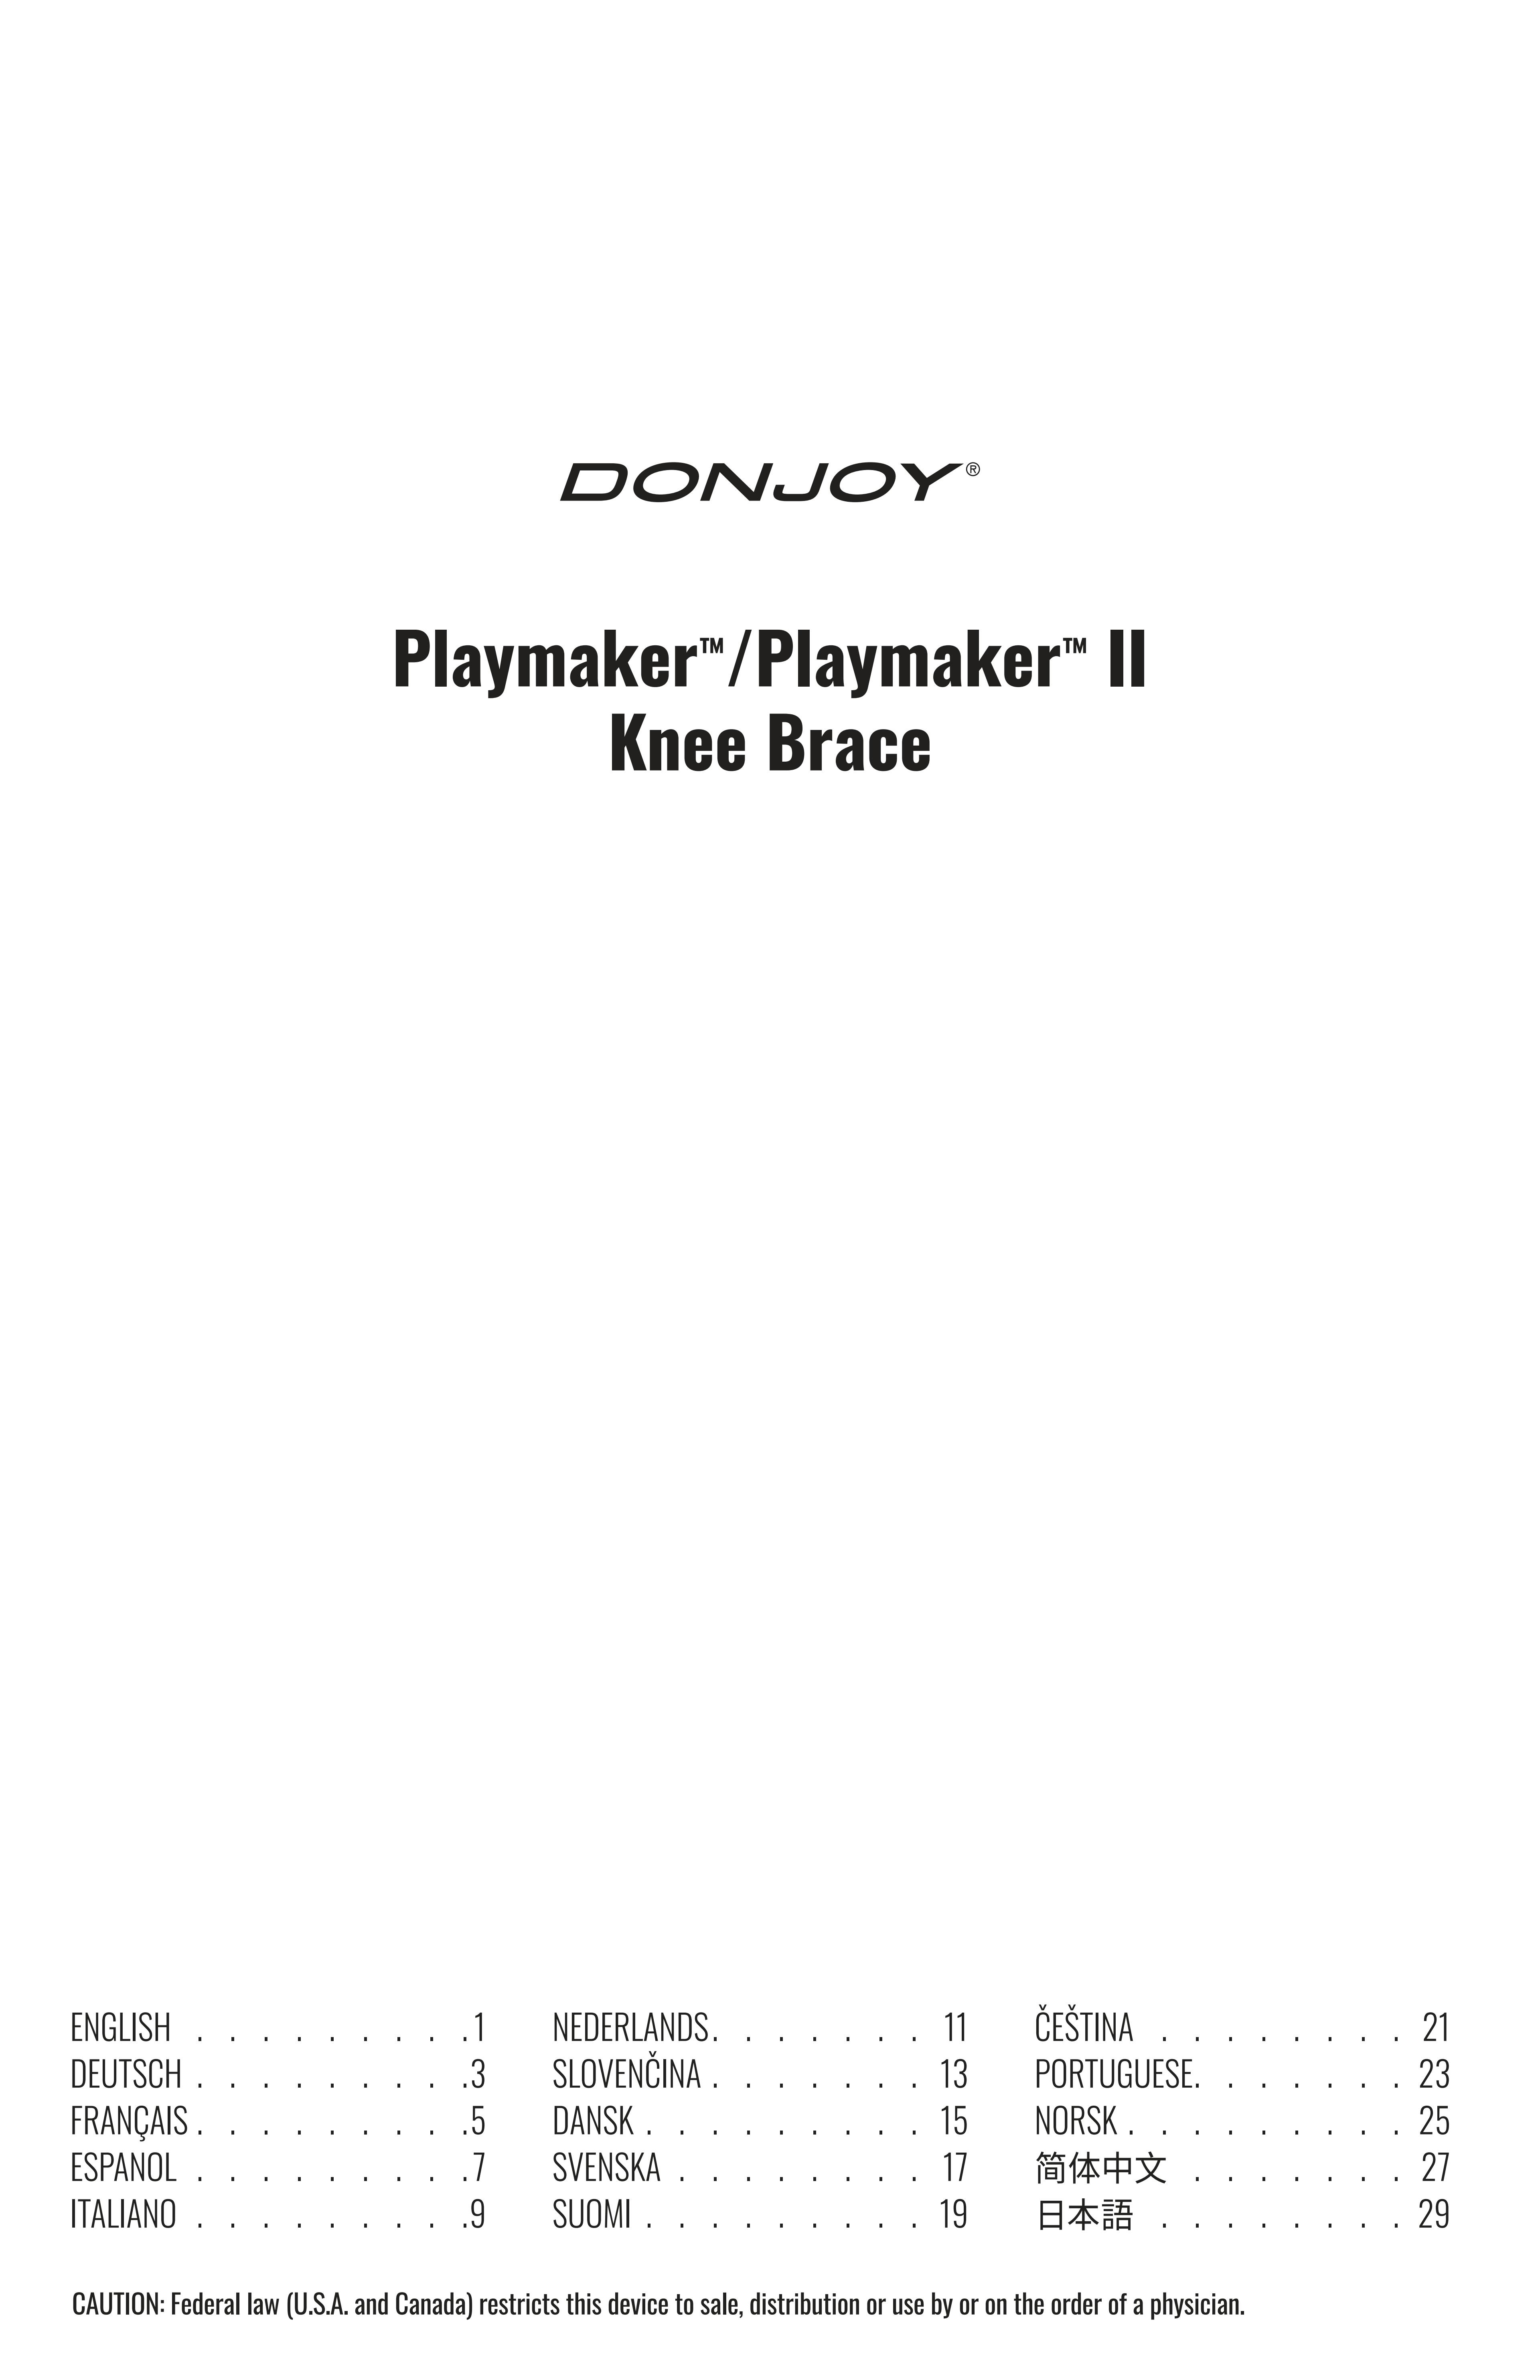 Gebrauchsanleitung_DONJOY_Playmaker_II_13-8796_Rev_J-2022-03-15.pdf